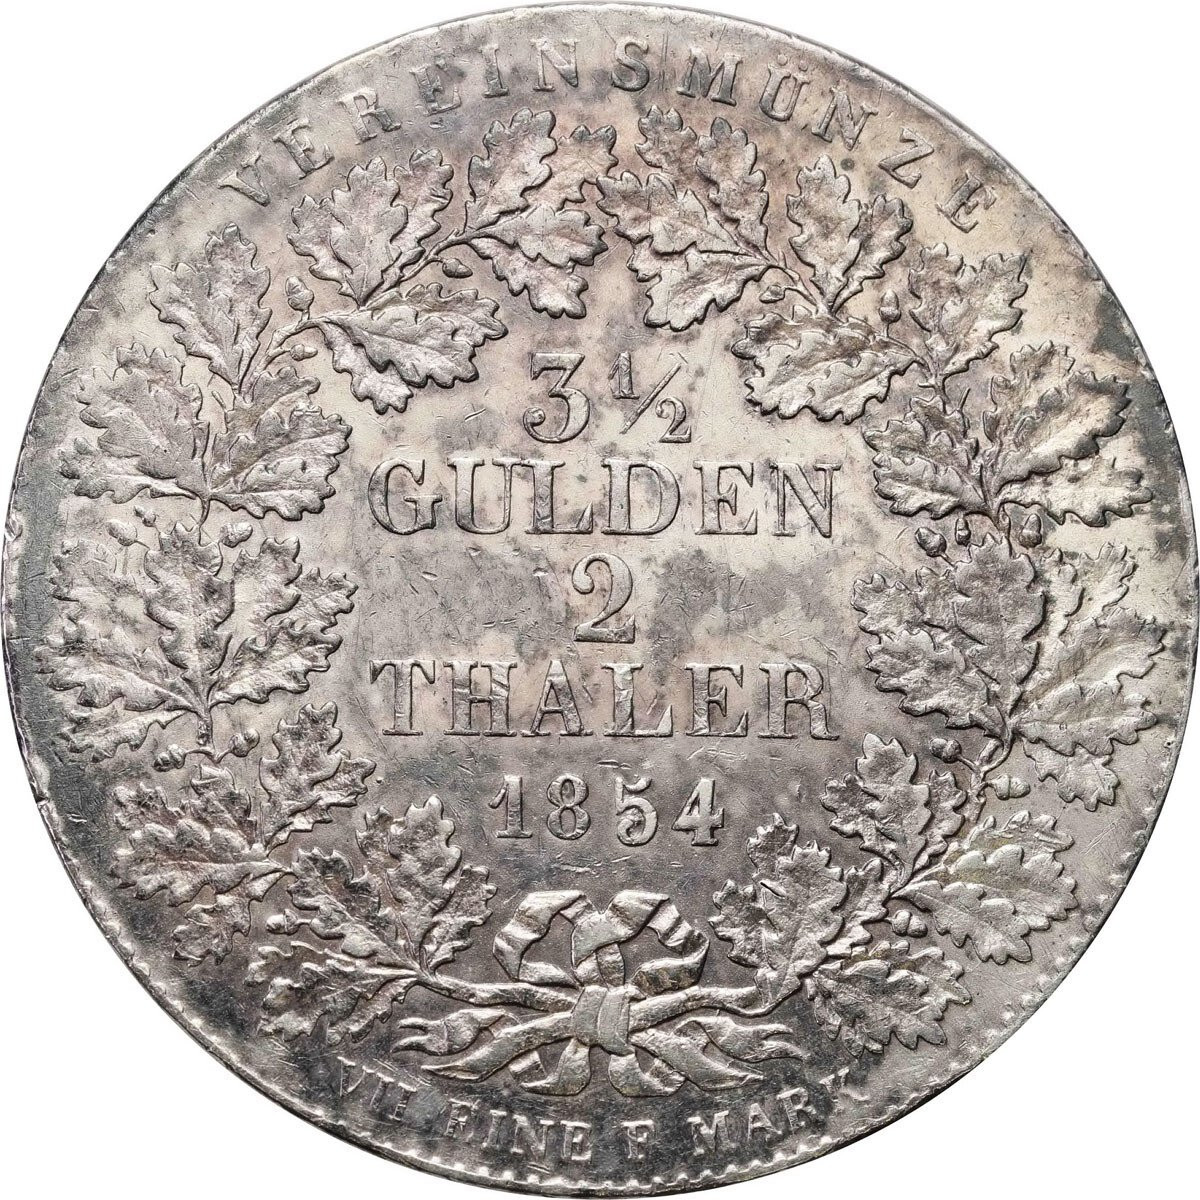 Niemcy. 3 1/2 Gulden - 2 talary 1854, Frankfurt